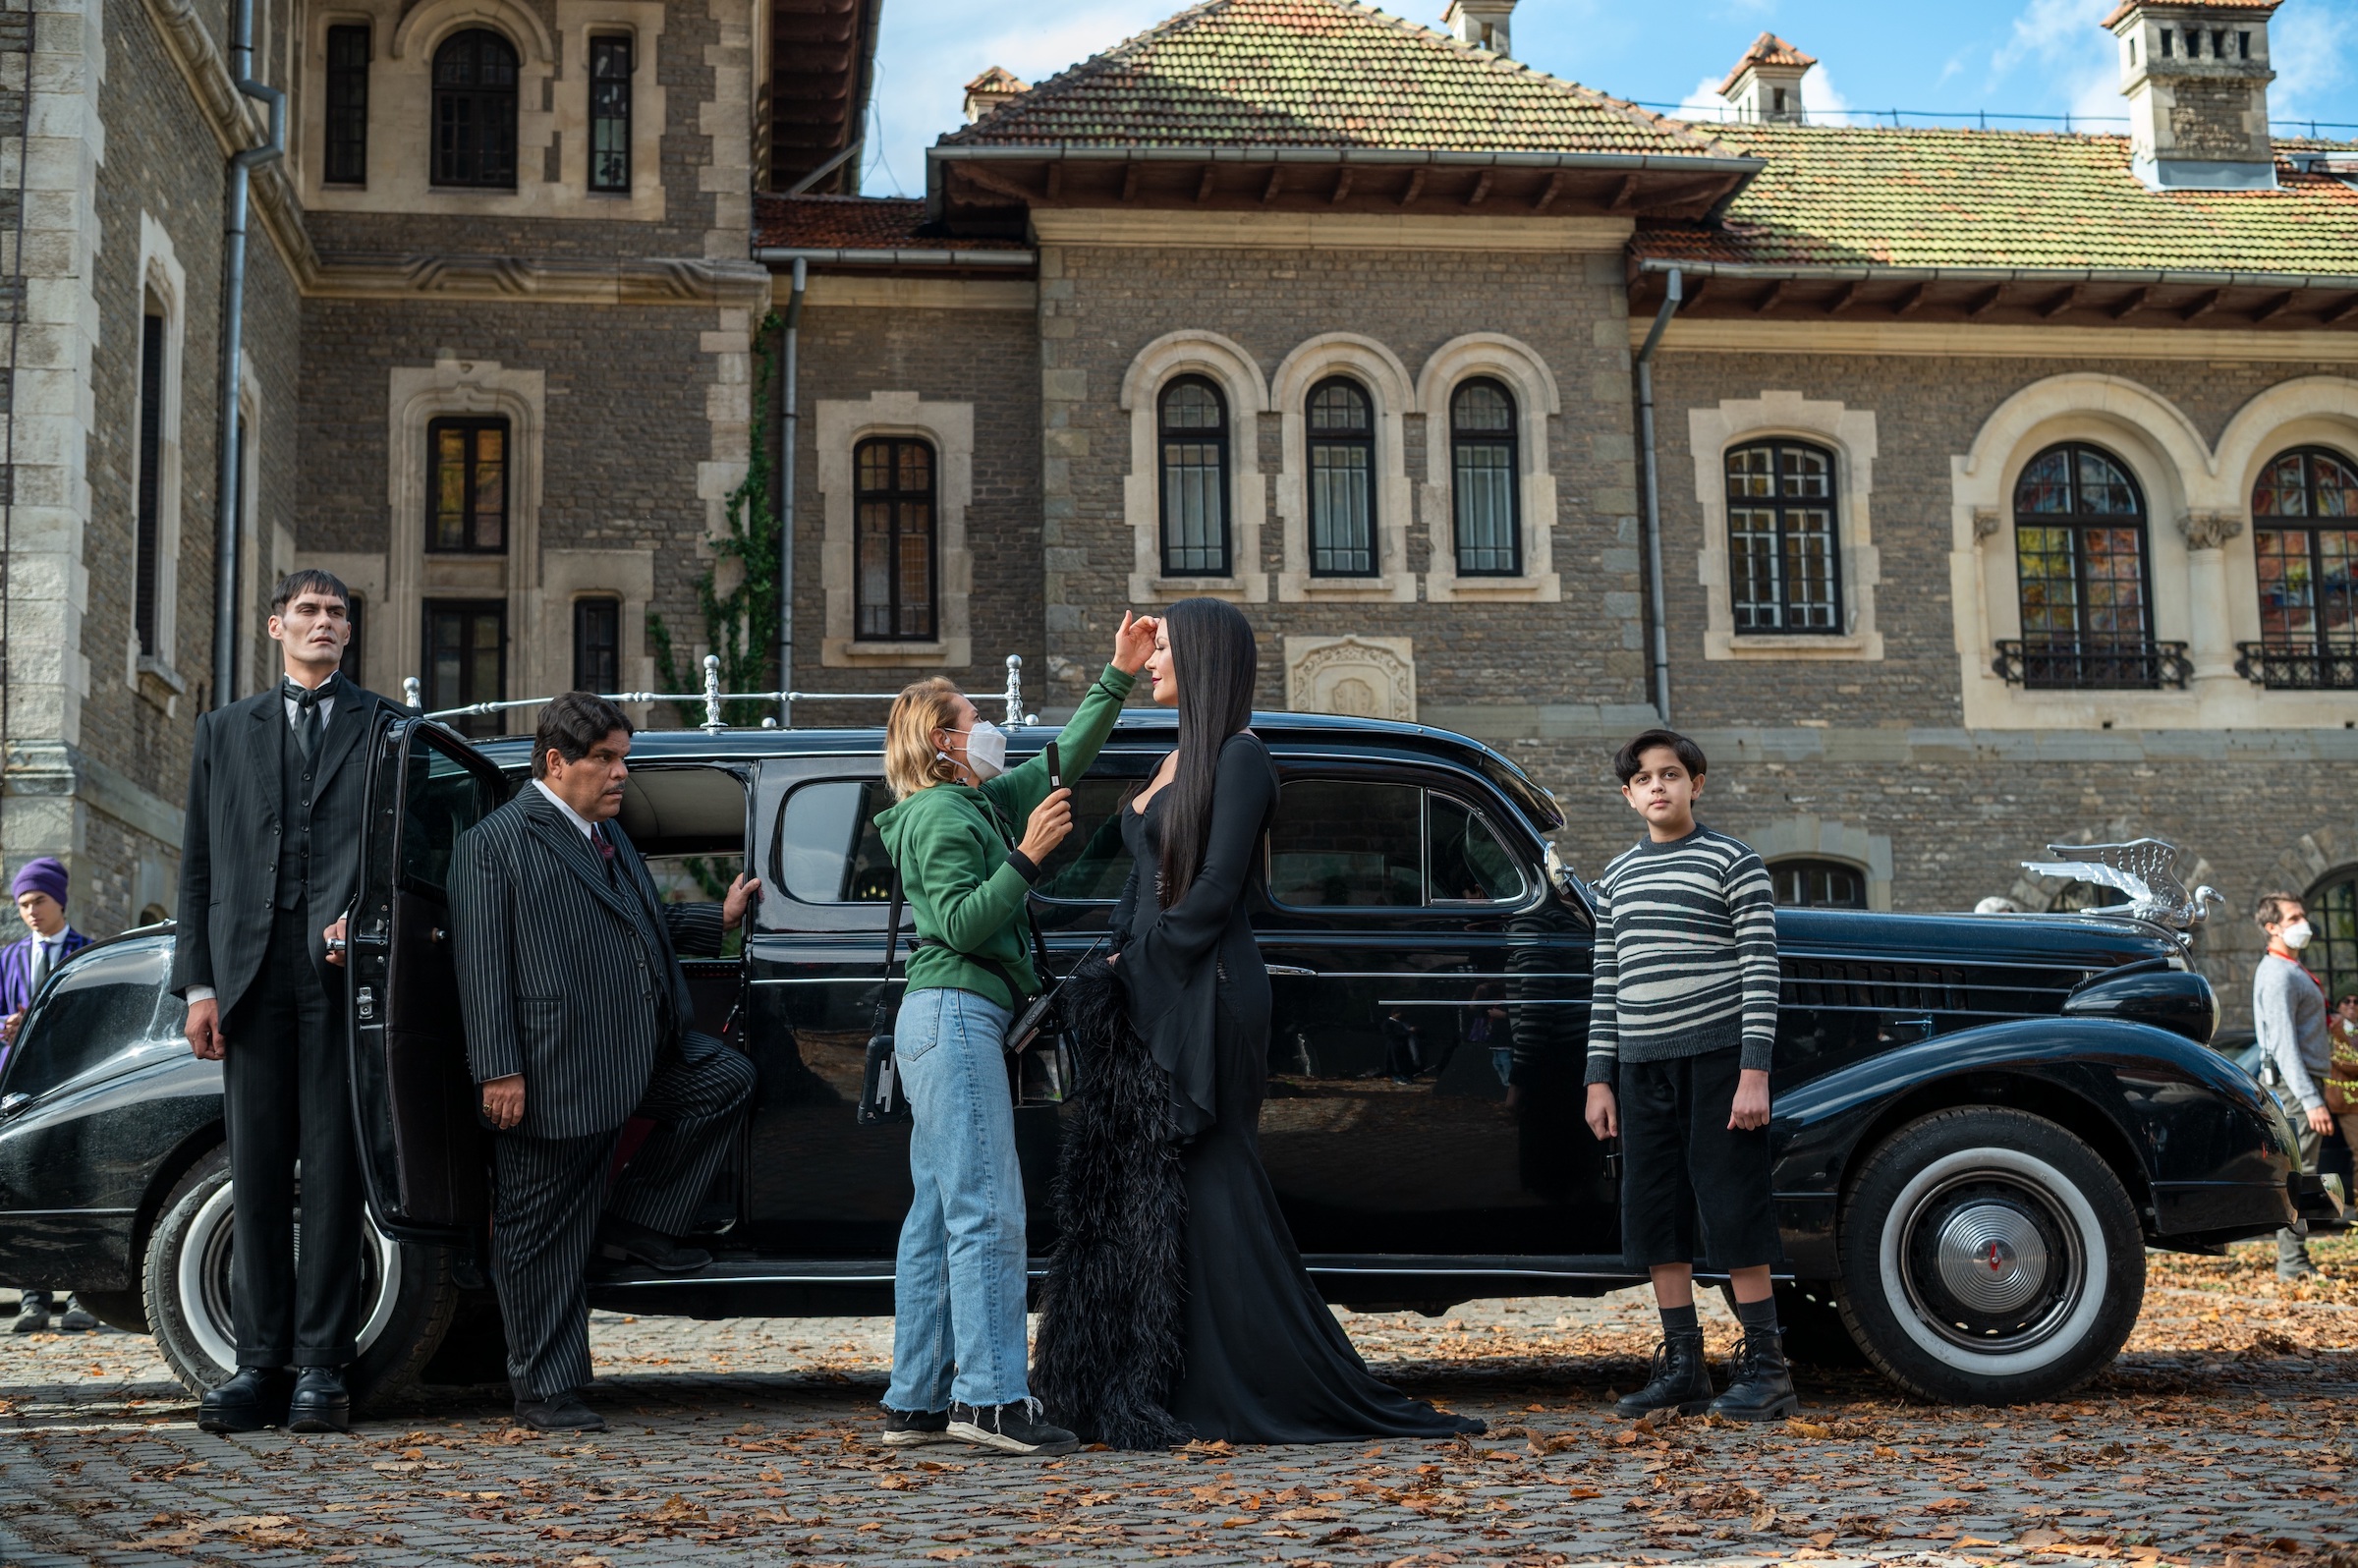 The butler Lurch (George Burcea), Gomez (Luis Guzmán), Morticia (Catherine Zeta-Jones), and Pugsley (Issac Ordonez) visit Nevermore Academy for Parents' Weekend. (Vlad Cioplea—Netflix)